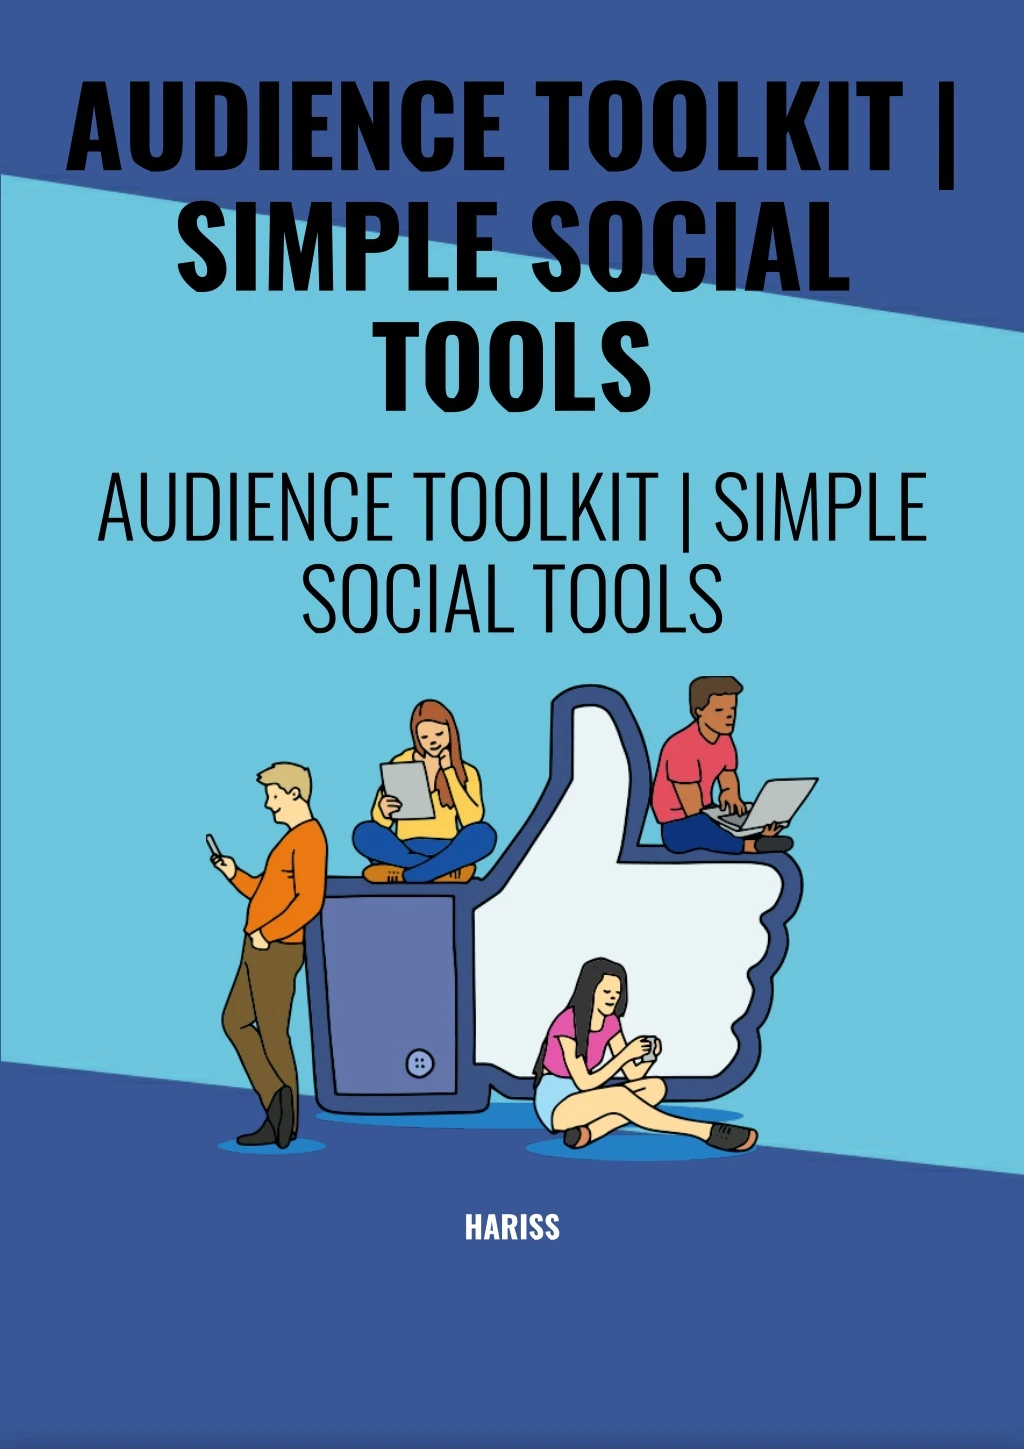 audience toolkit simple social tools